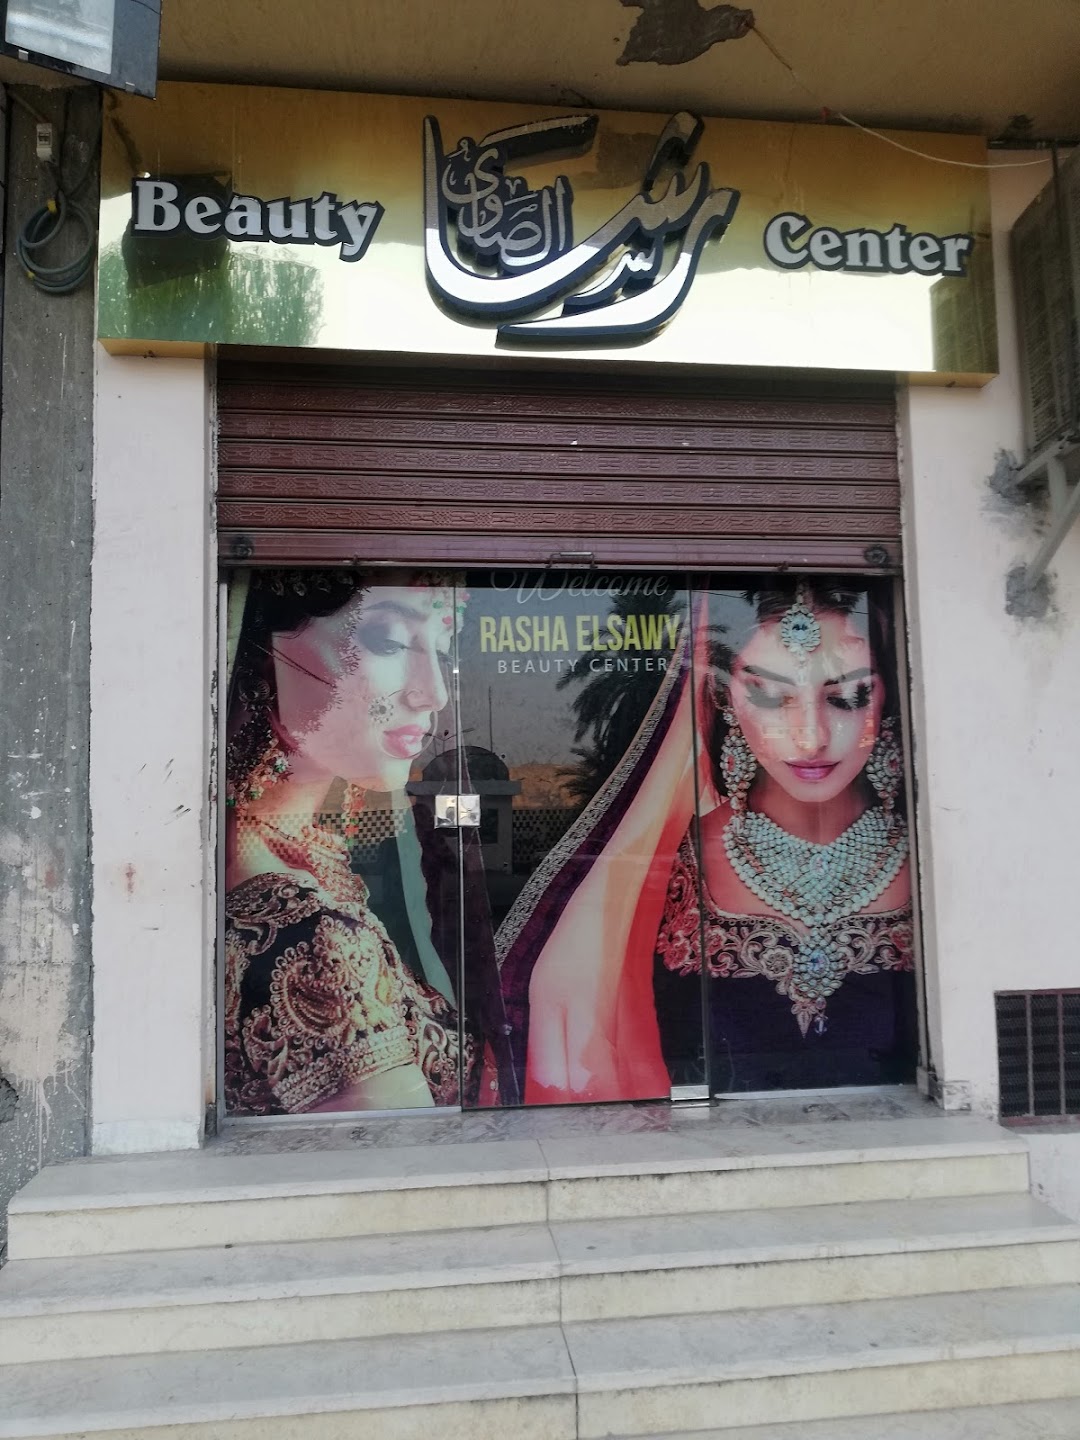 Rasha elsawy Beauty center